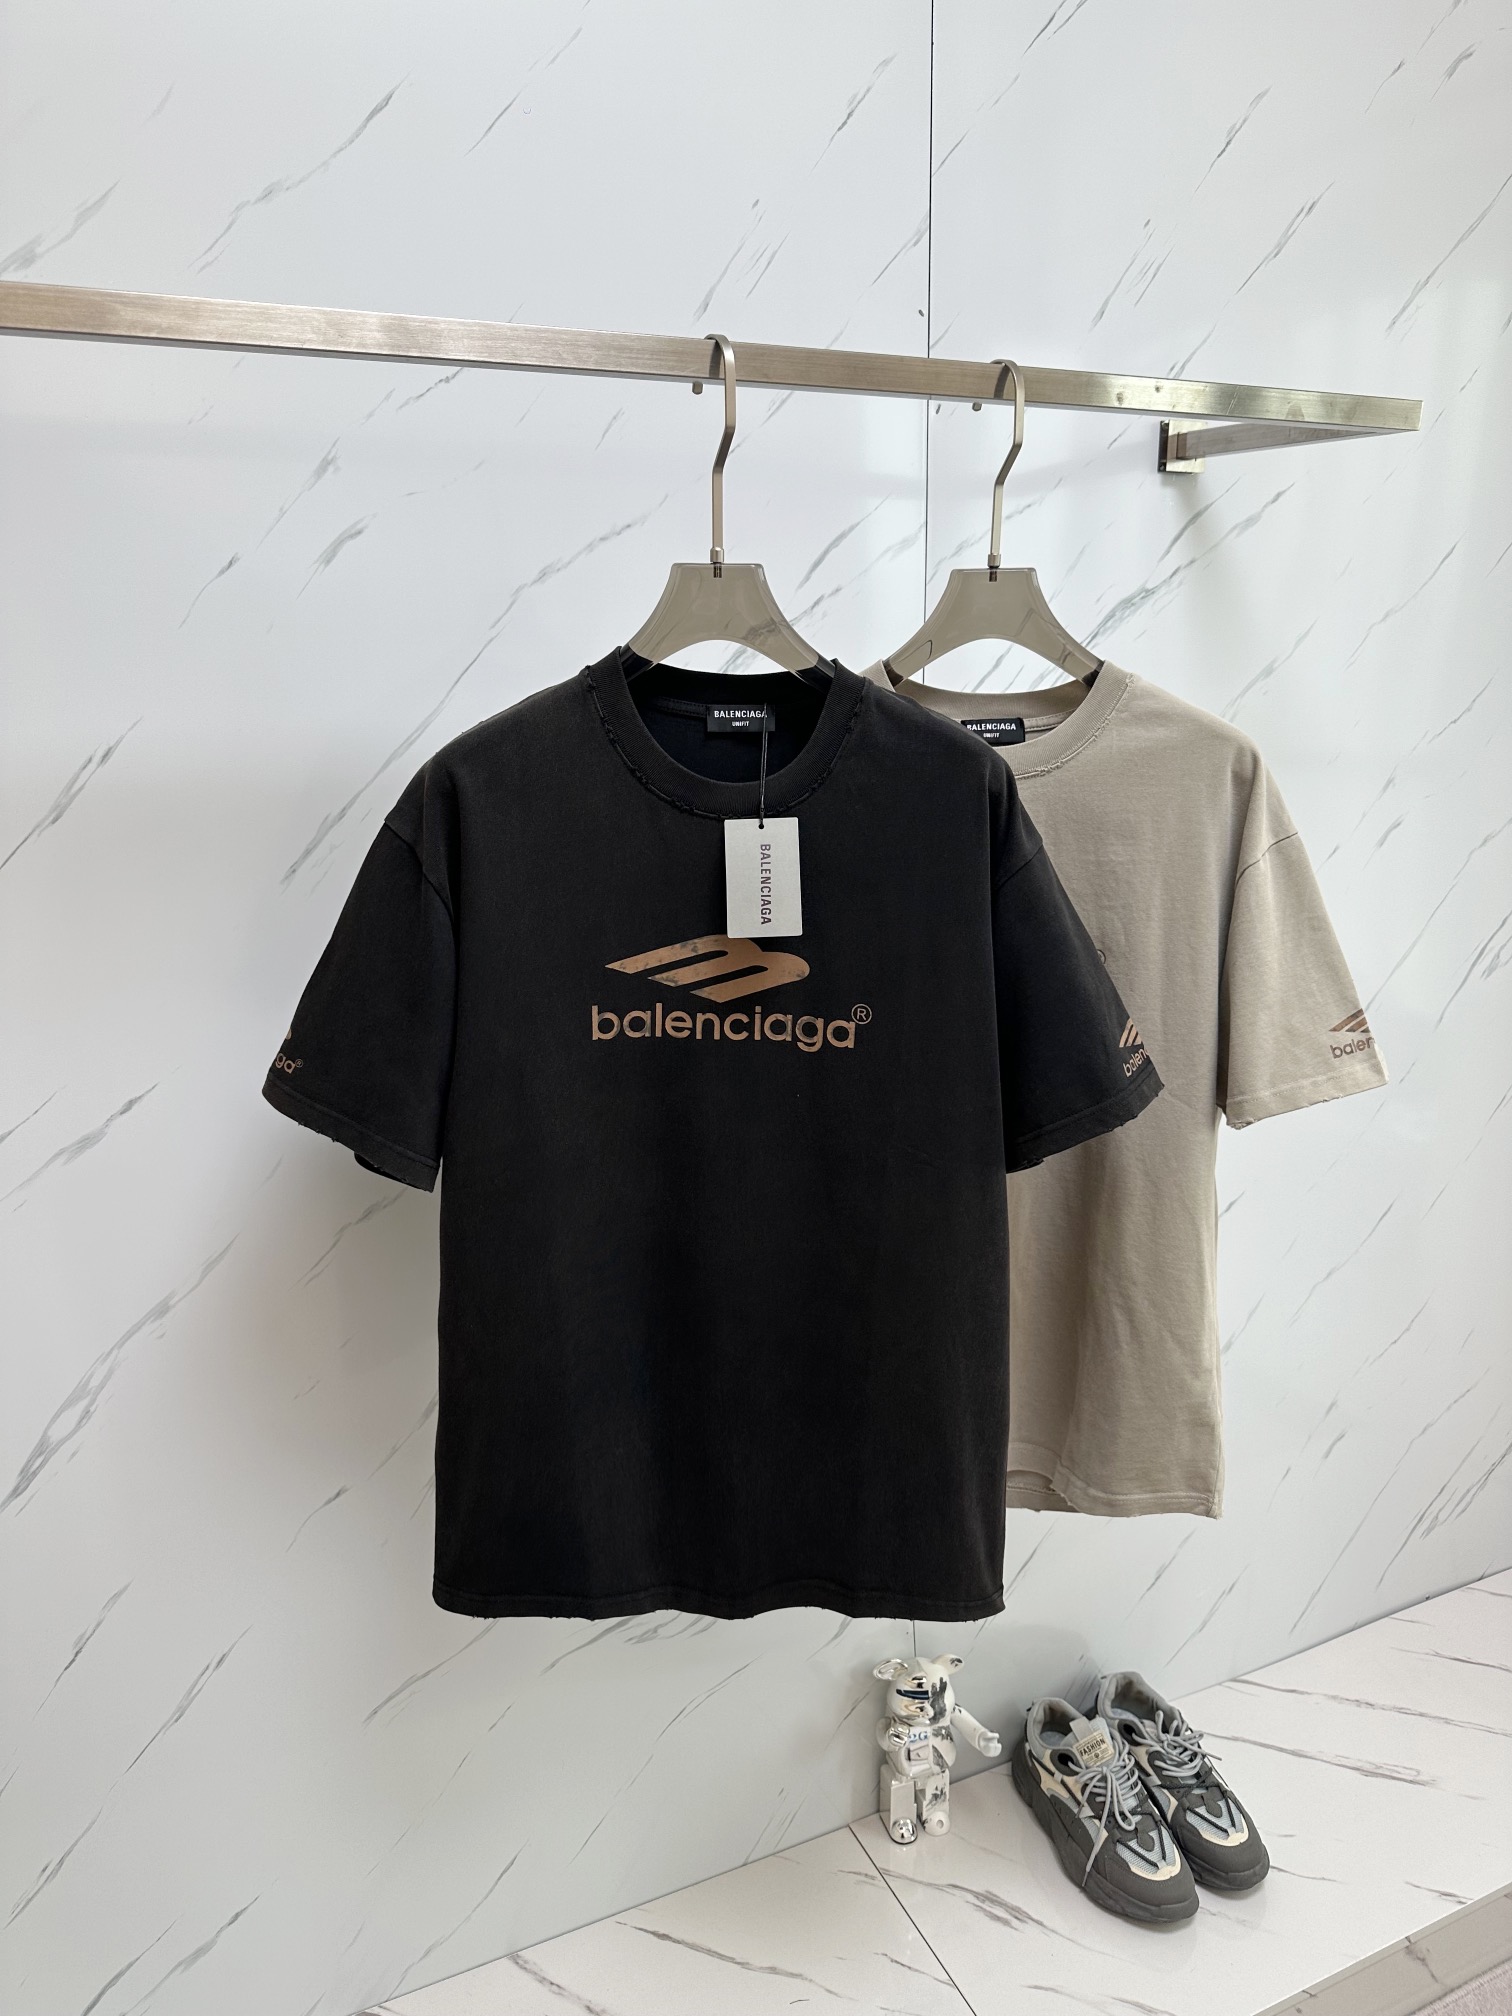 Buy Top High quality Replica
 Balenciaga Clothing T-Shirt Sale
 Unisex Spring/Summer Collection Short Sleeve